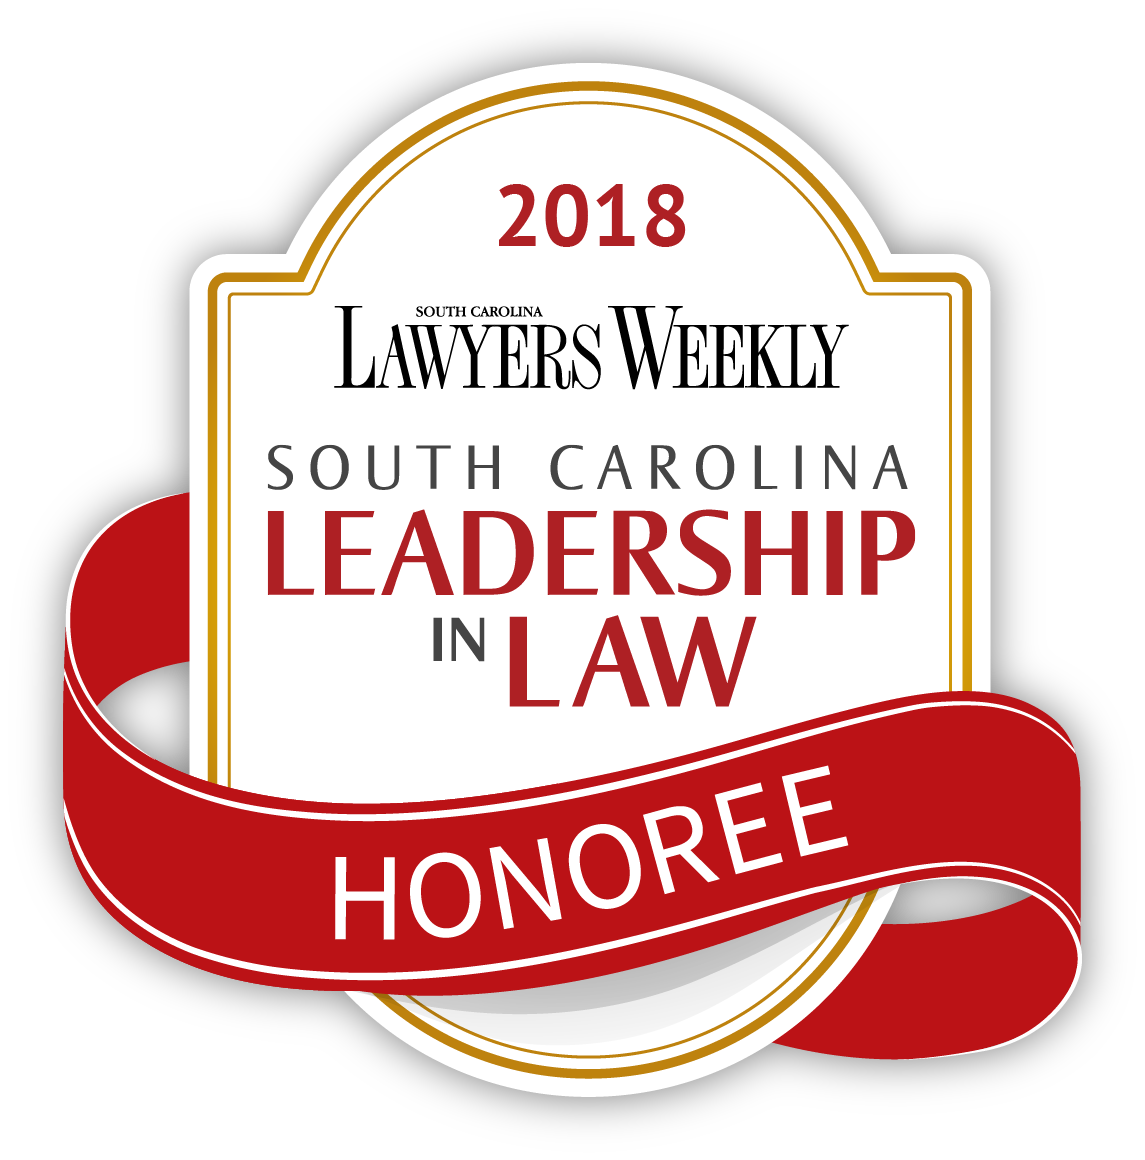 South Carolina Leadership in Law Honoree